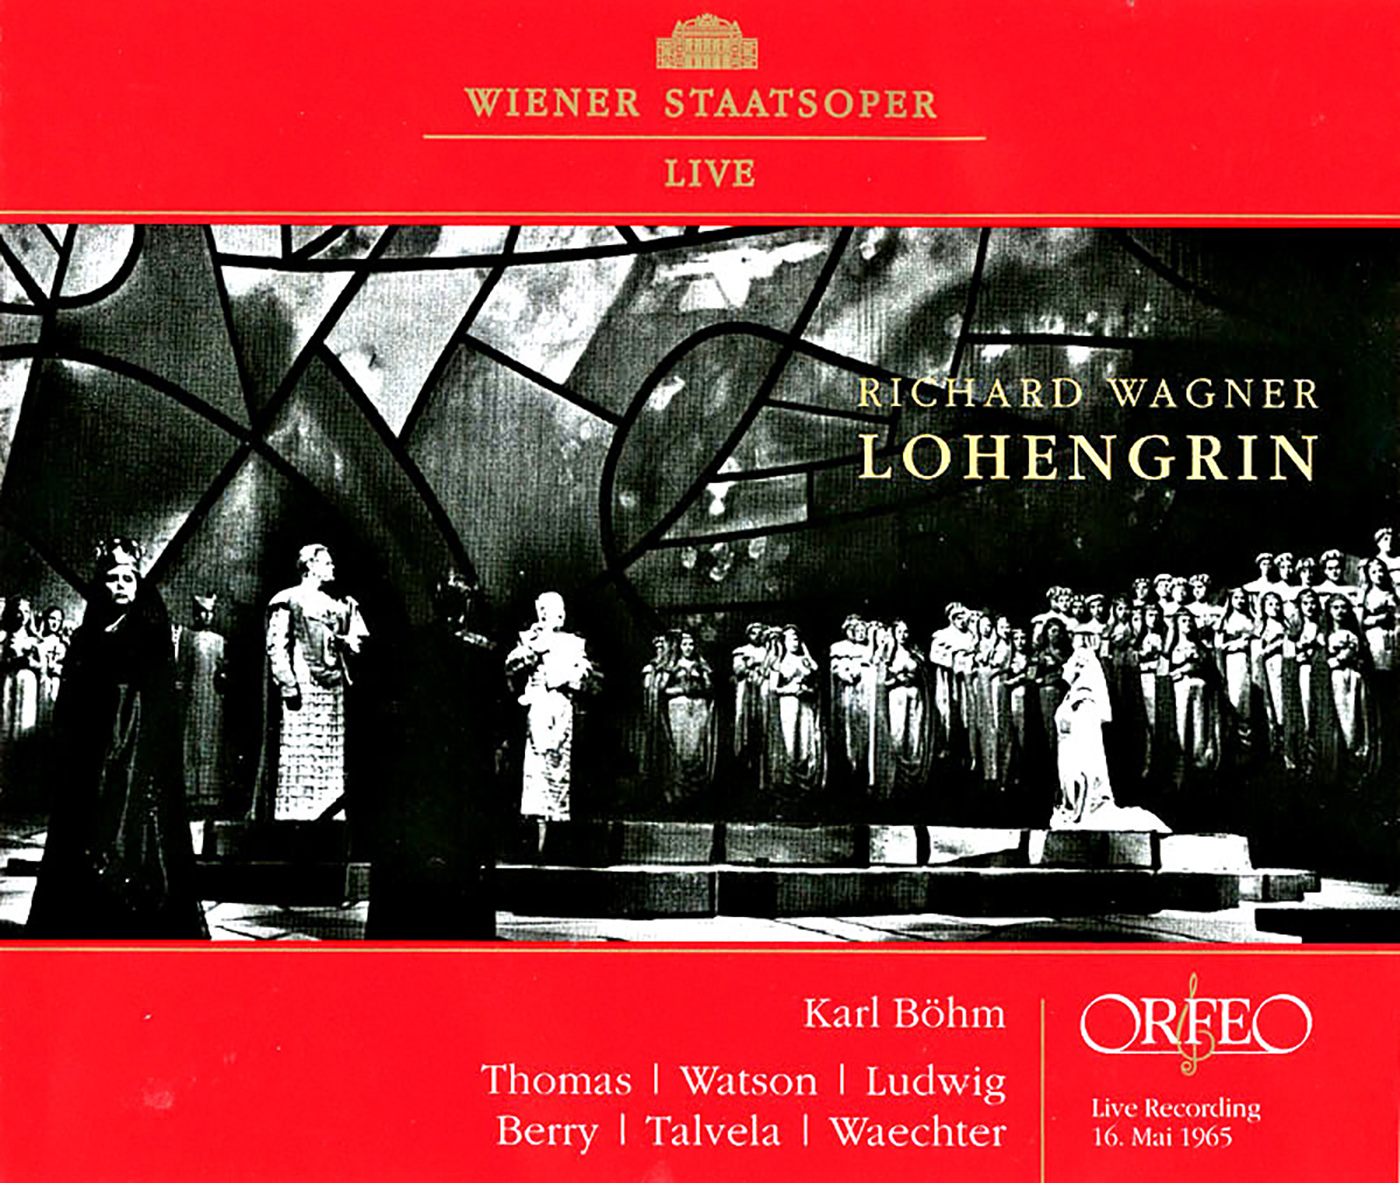 WAGNER, R.: Lohengrin Opera J. Thomas, C. Watson, C. Ludwig, Berry, Talvela, Waechter, Vienna State Opera Chorus and Orchestra, K. B hm